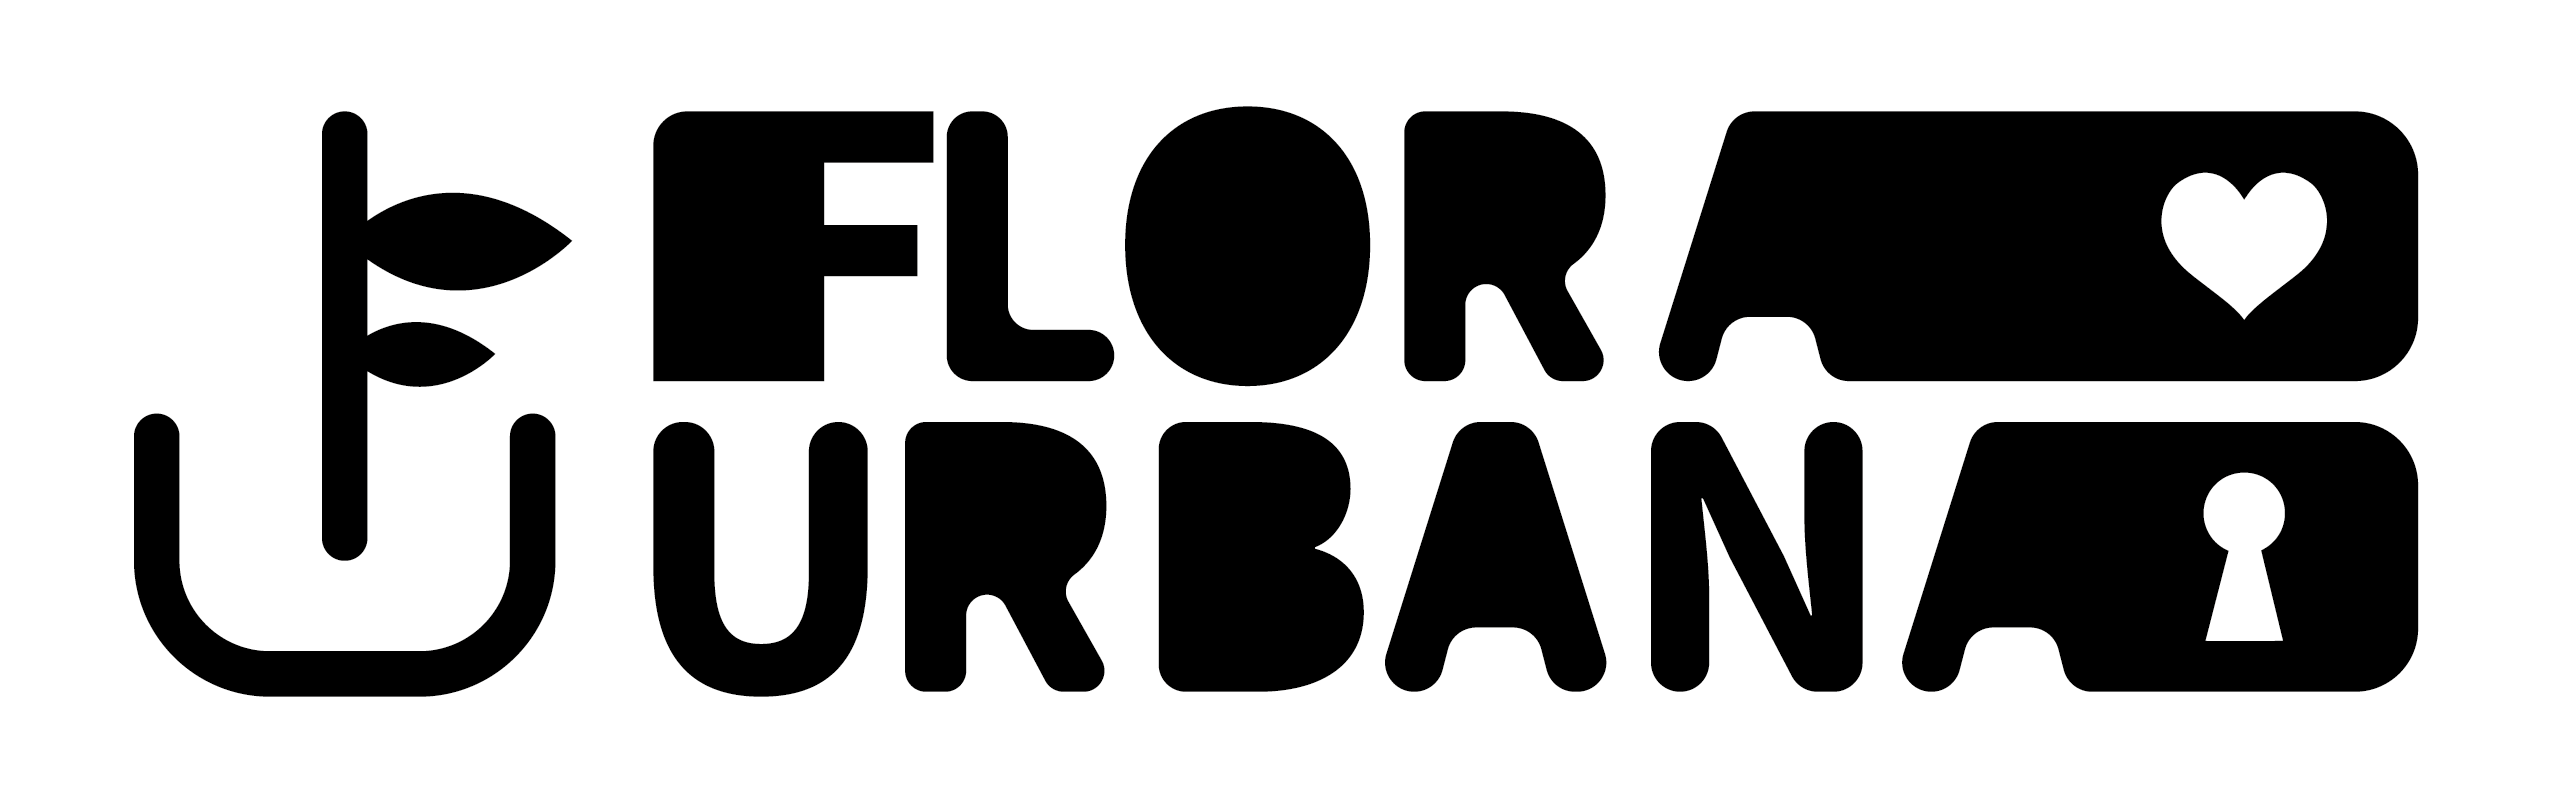 Flora Urbana